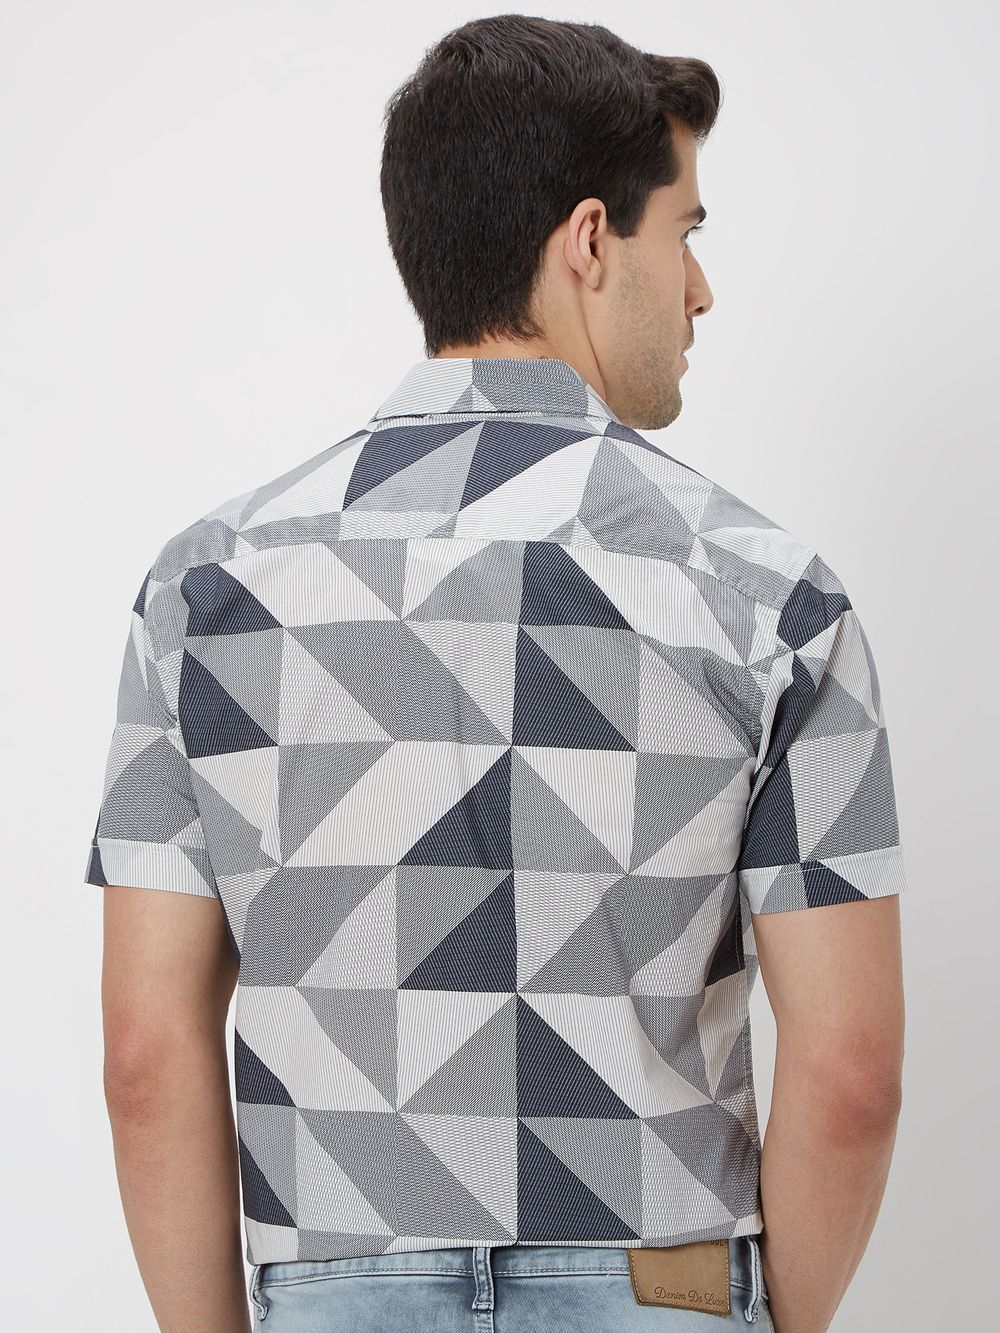 Grey Digital Print Shirt